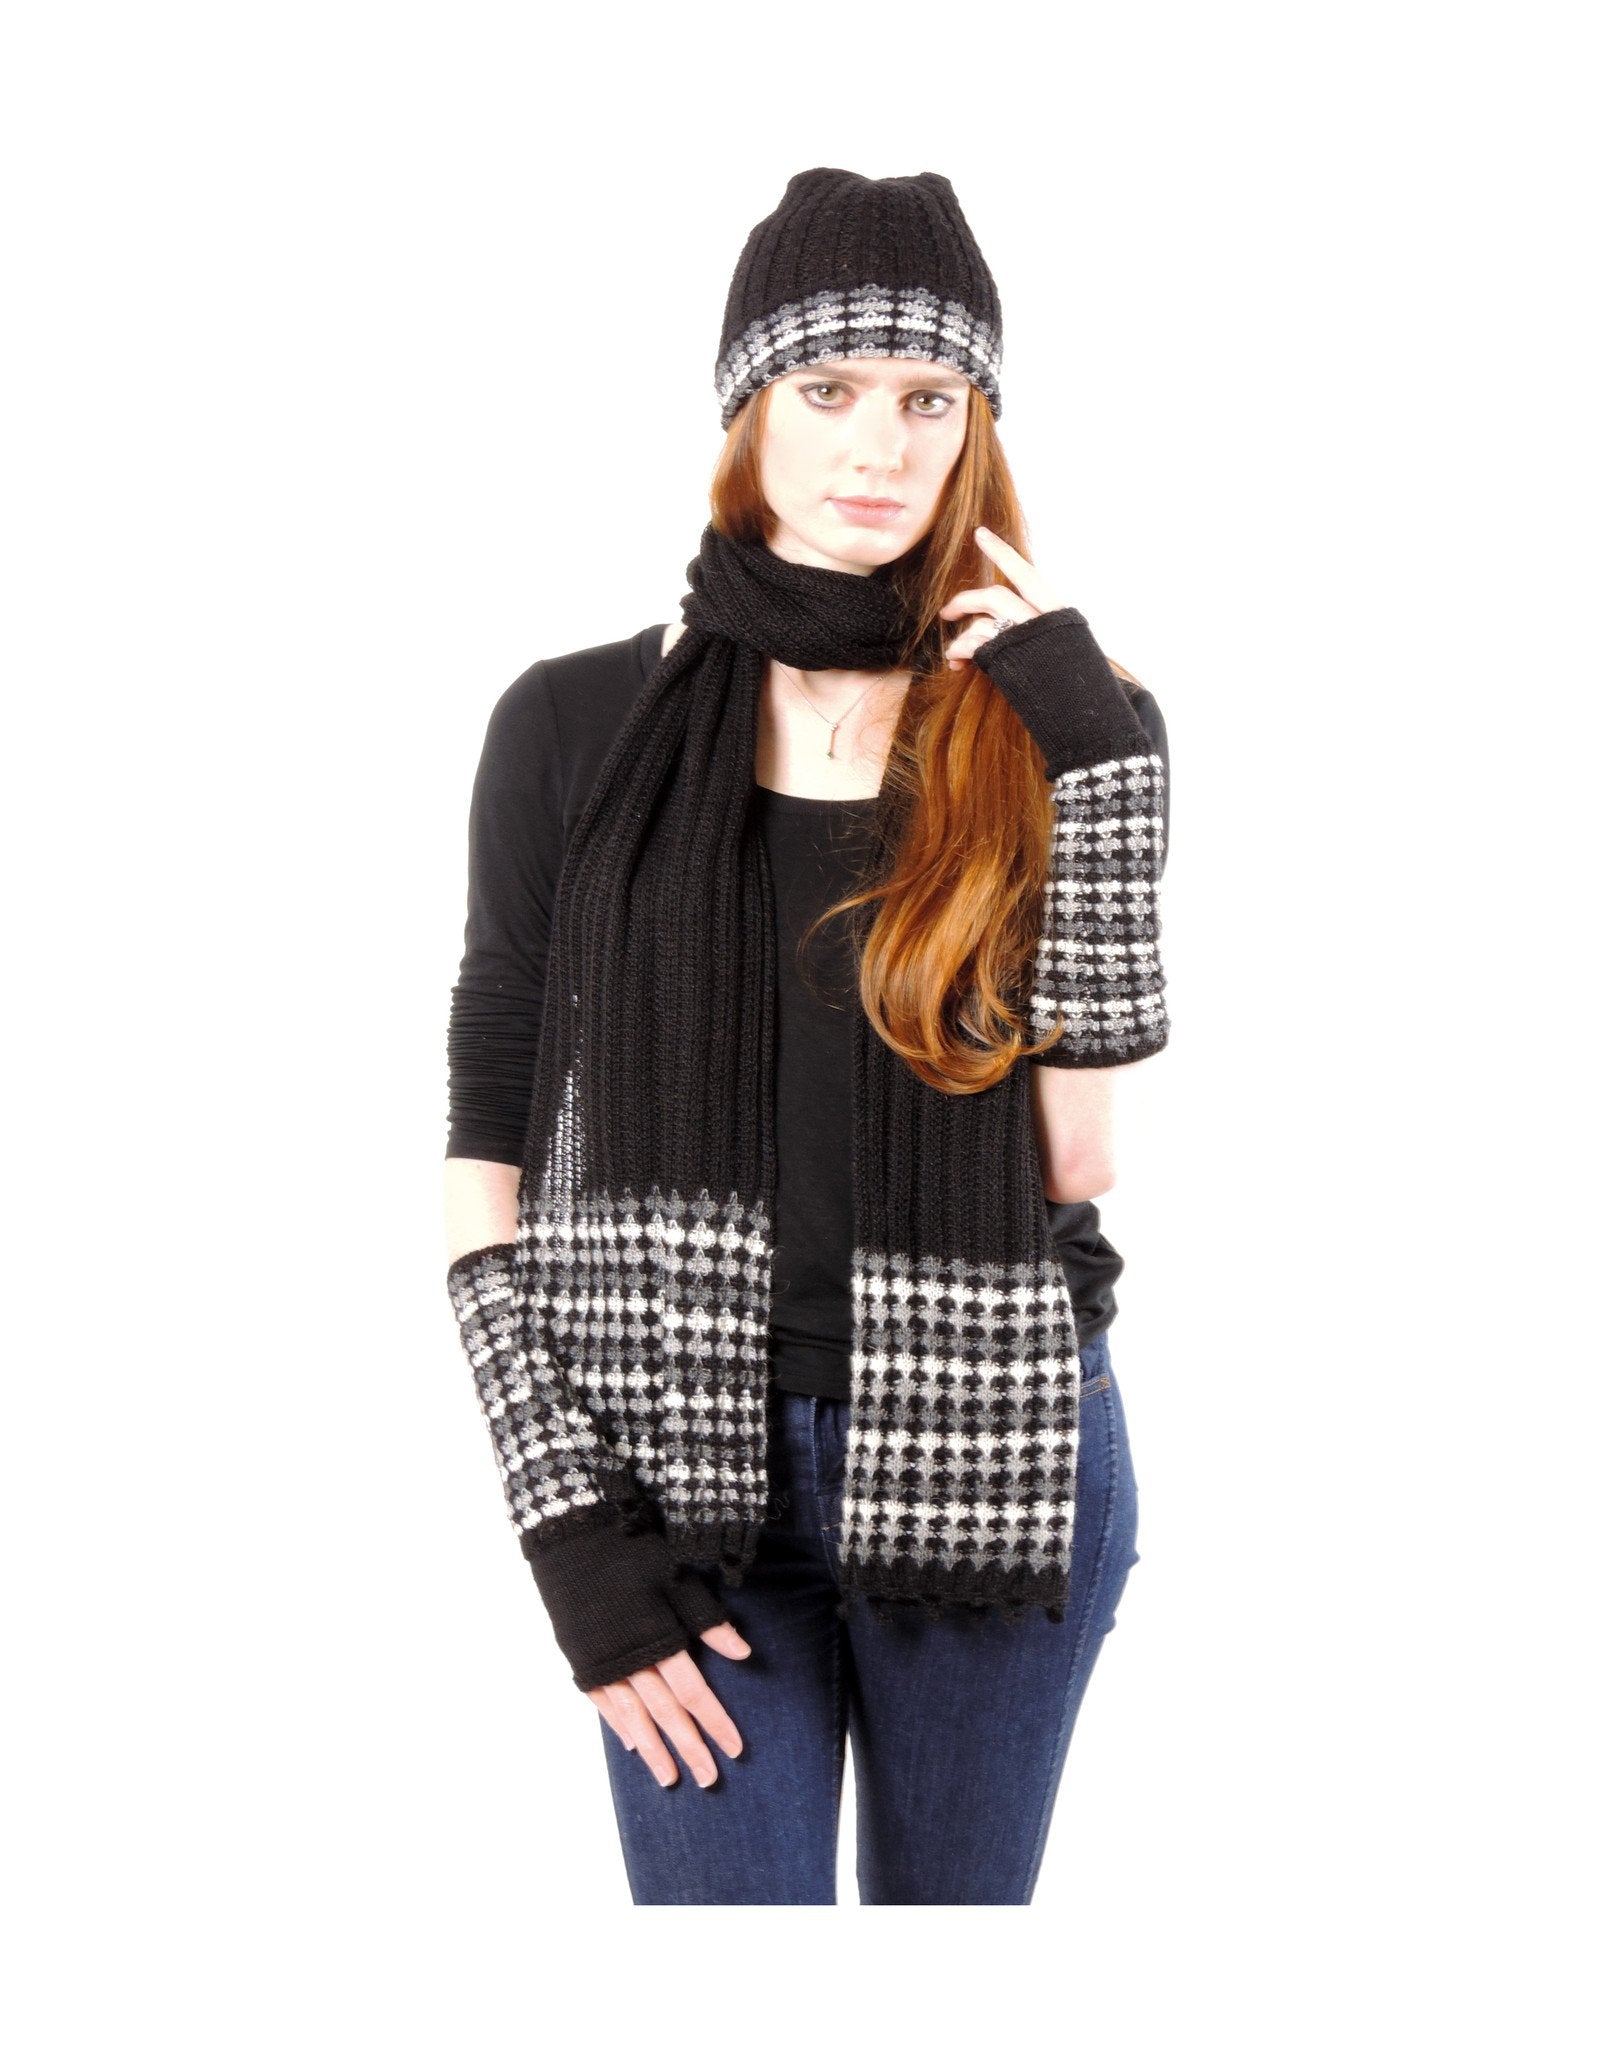 Baby Alpaca Knit Scarf Hat Gloves Set - Black, Grey & White - Qinti - The Peruvian Shop